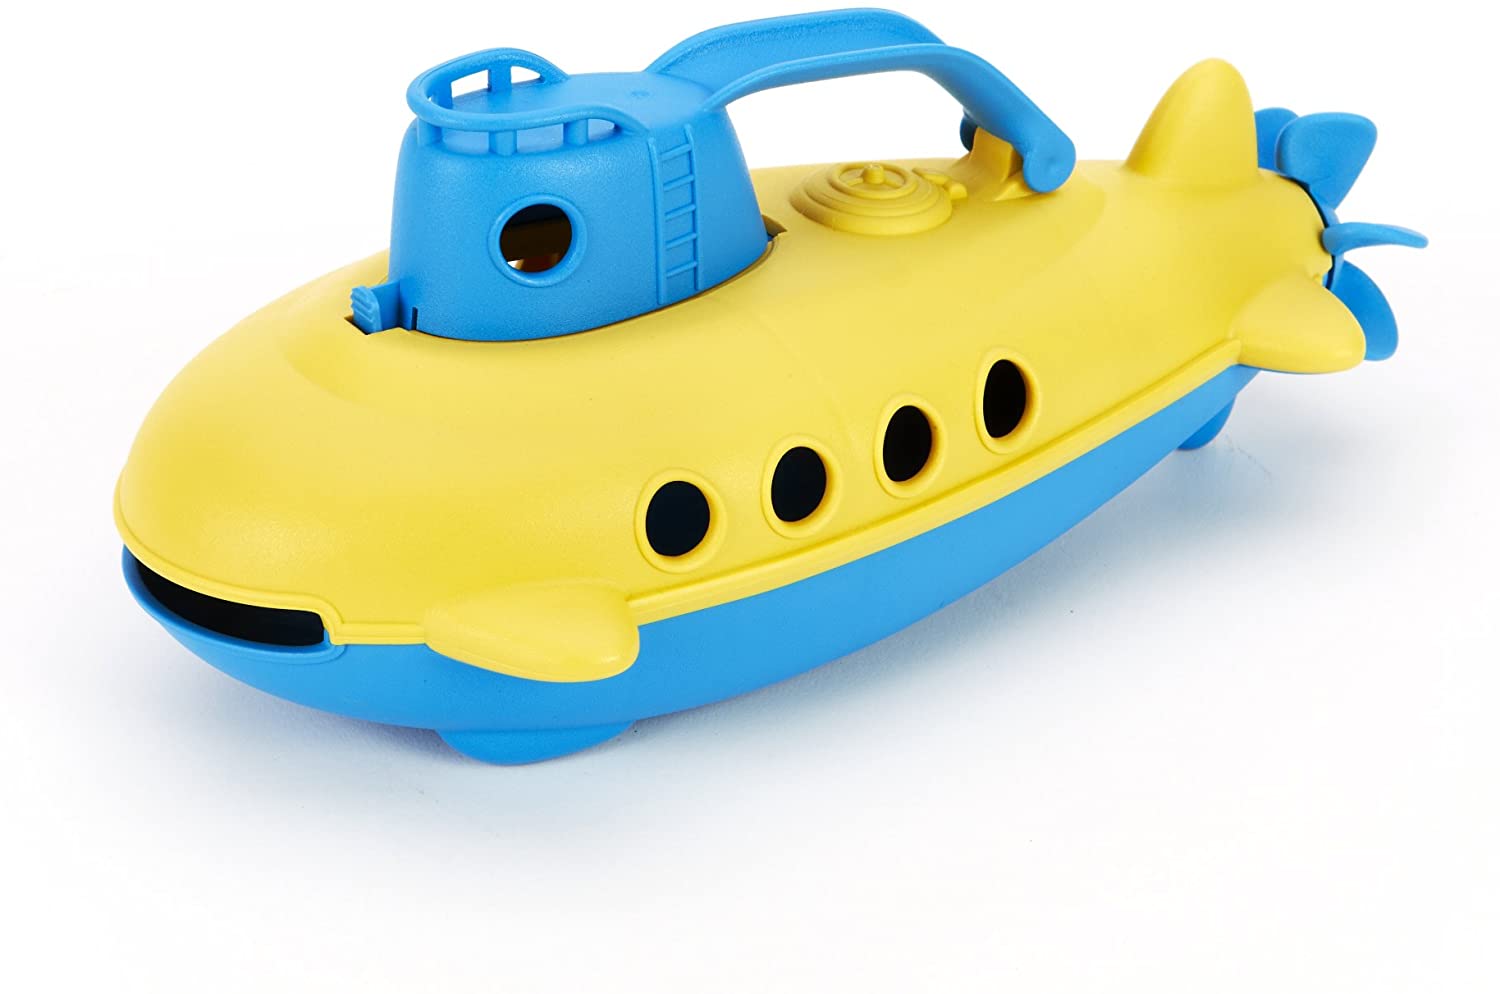 Green Toys Blue Submarine Toy - ANB Baby -bath toy